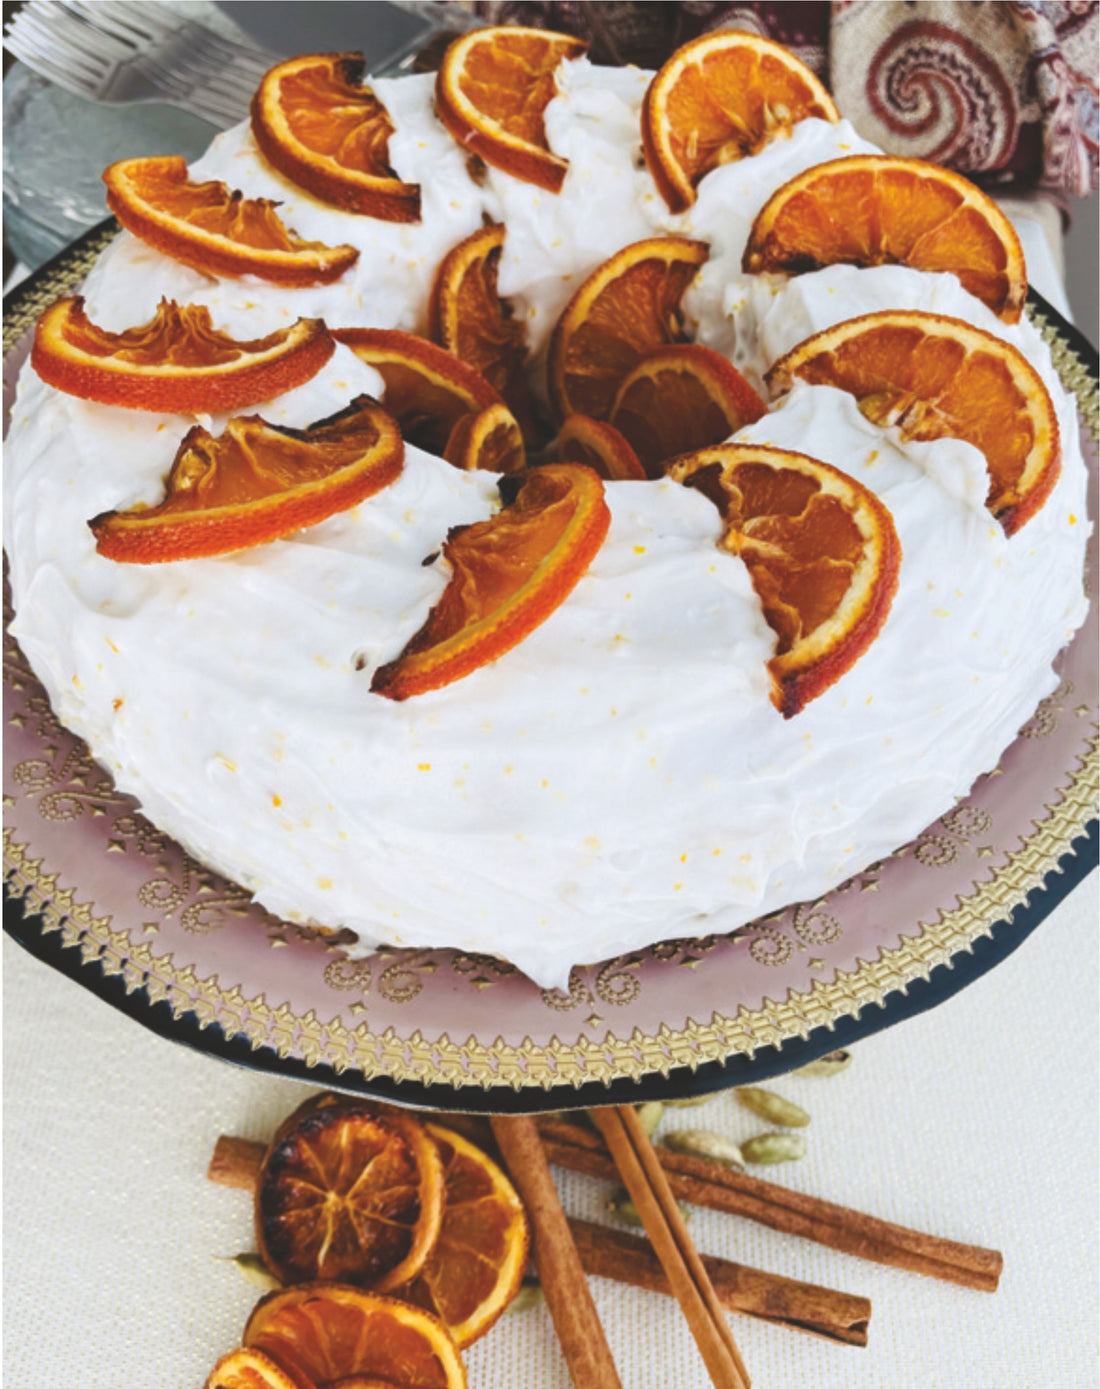 Moroccan Orange-Cardamom Cake